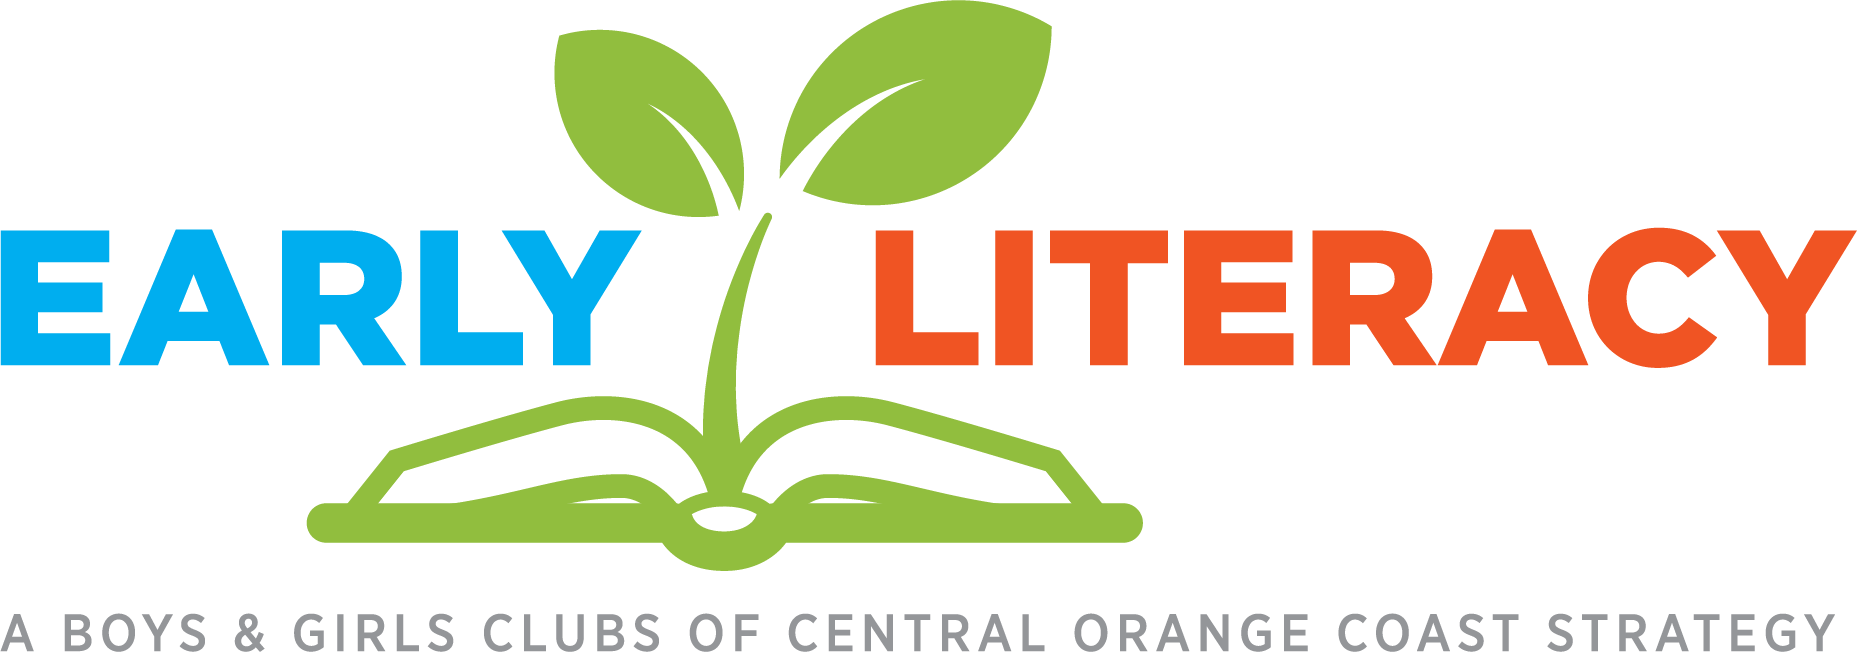 BGCCentralOC Early Literacy logo